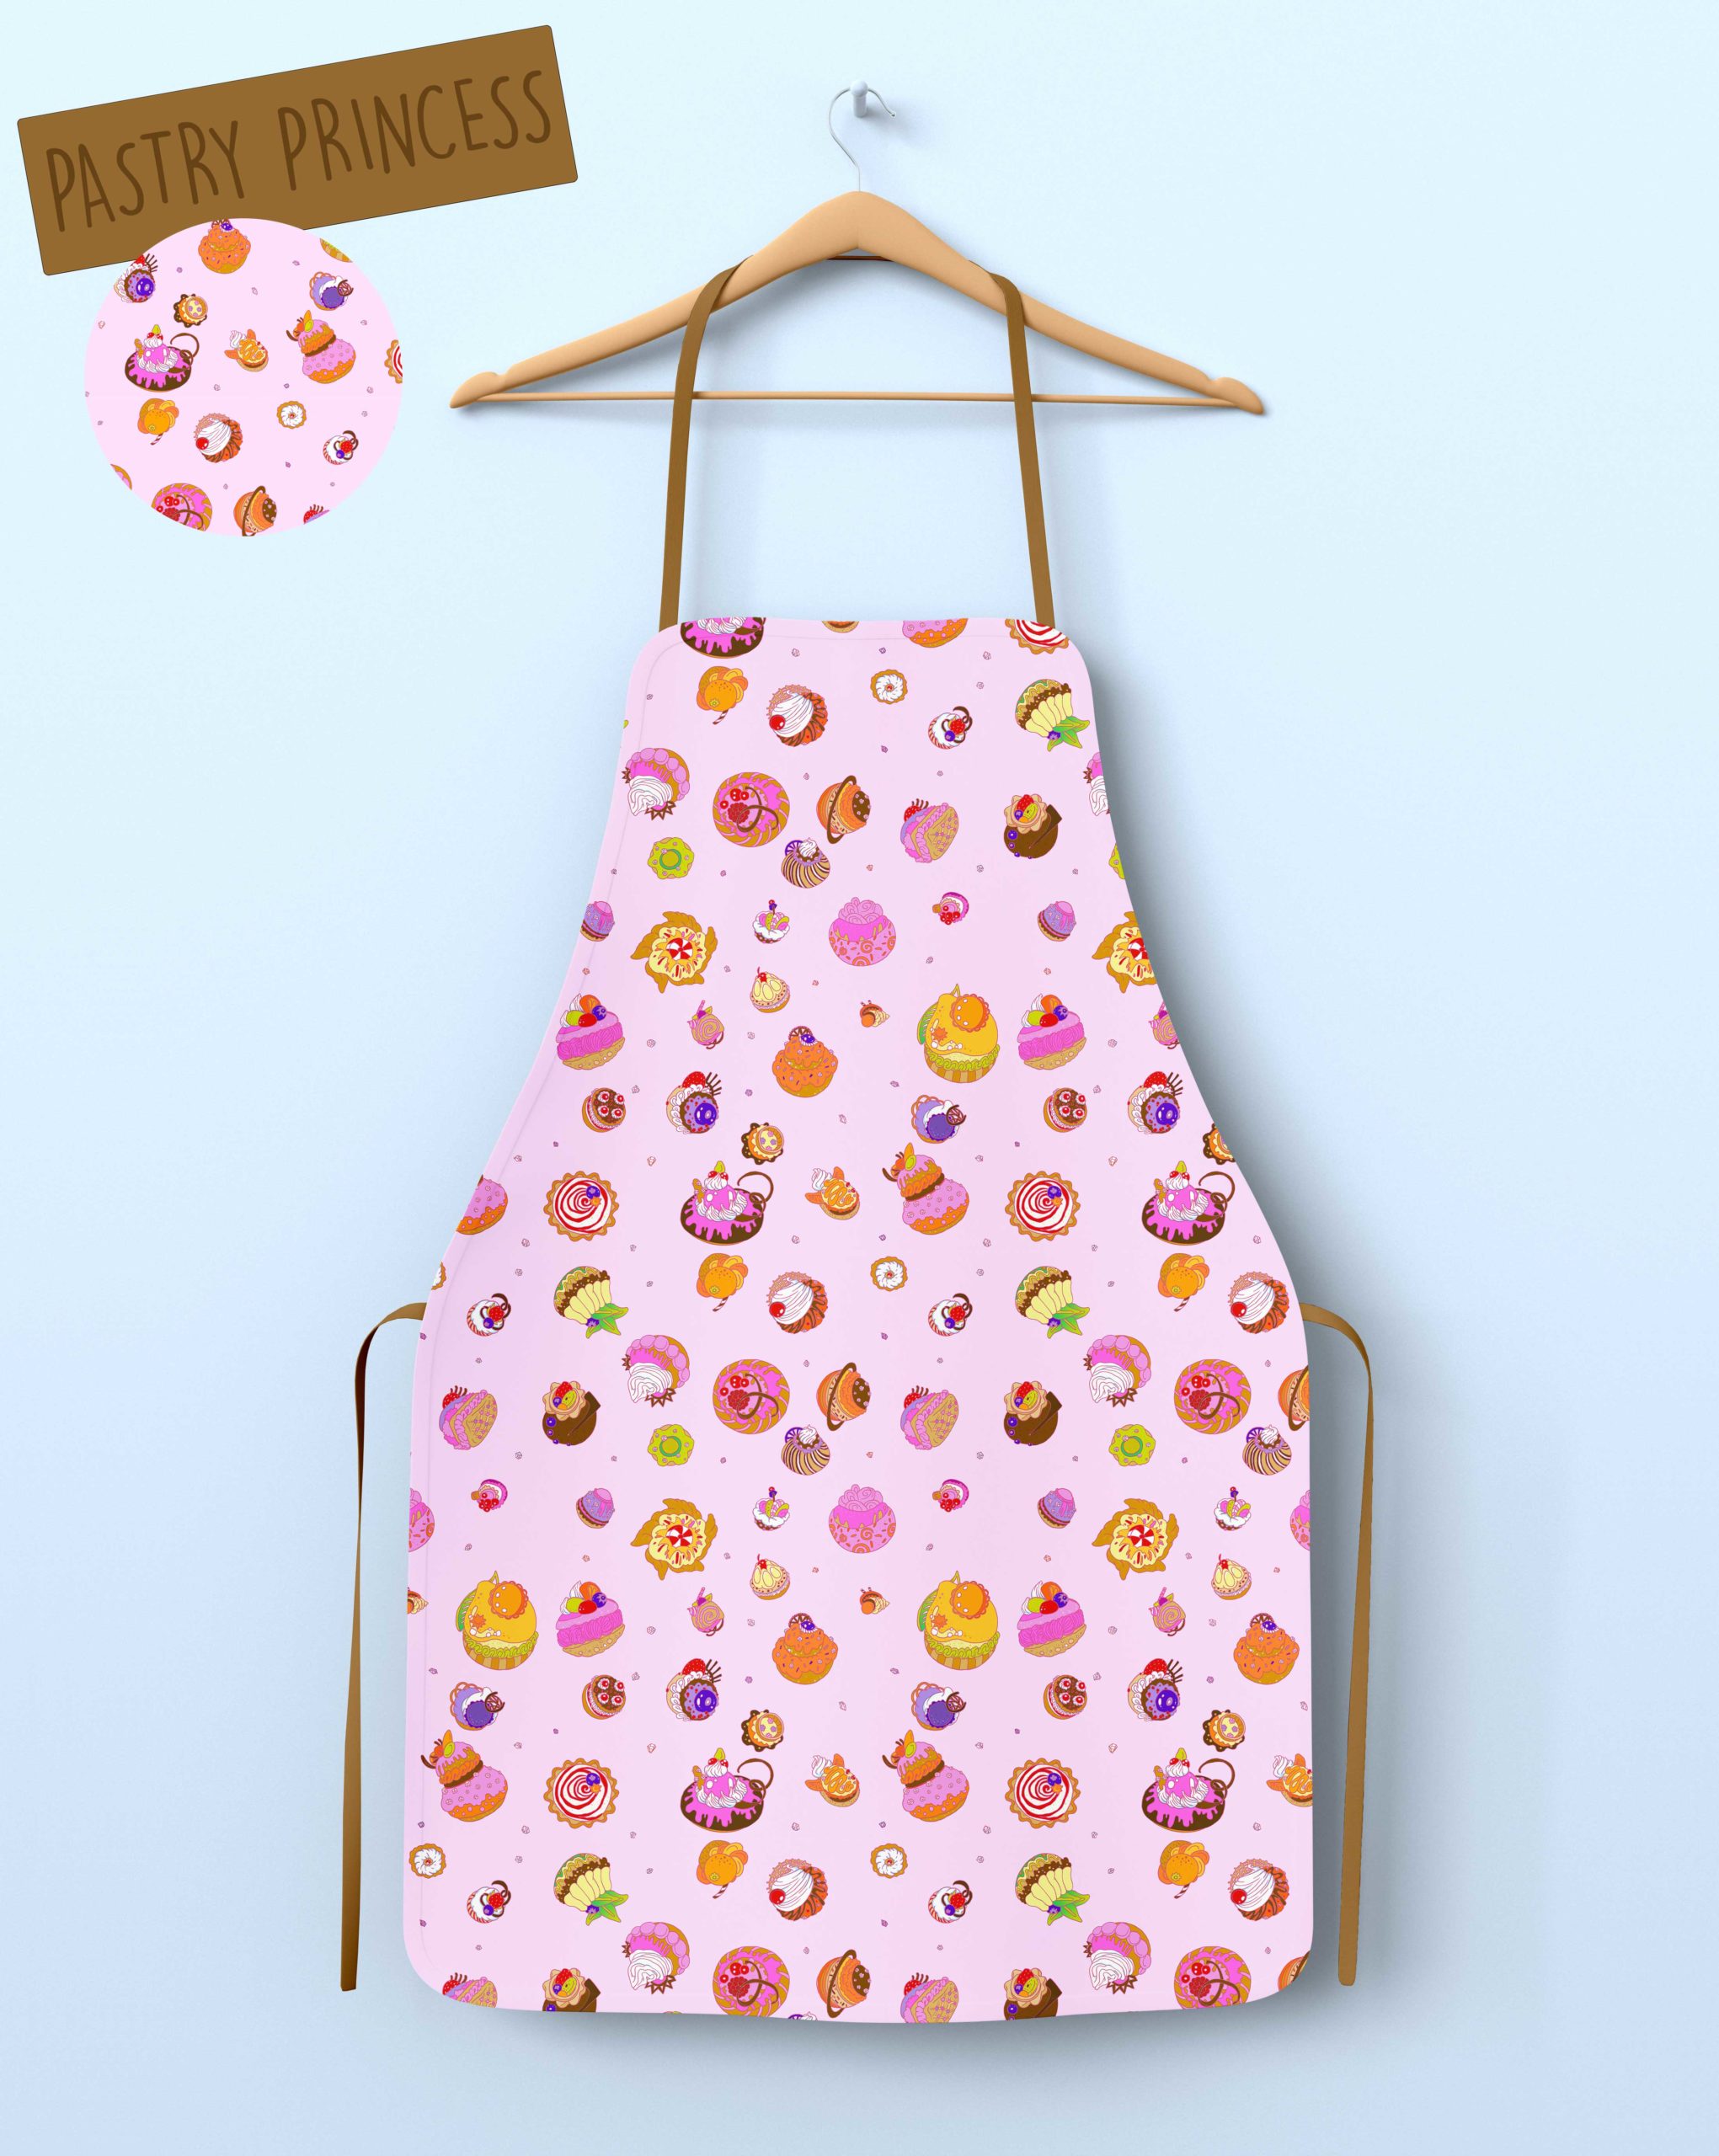 Melissa Damour, Pastry princess pattern, apron mockup